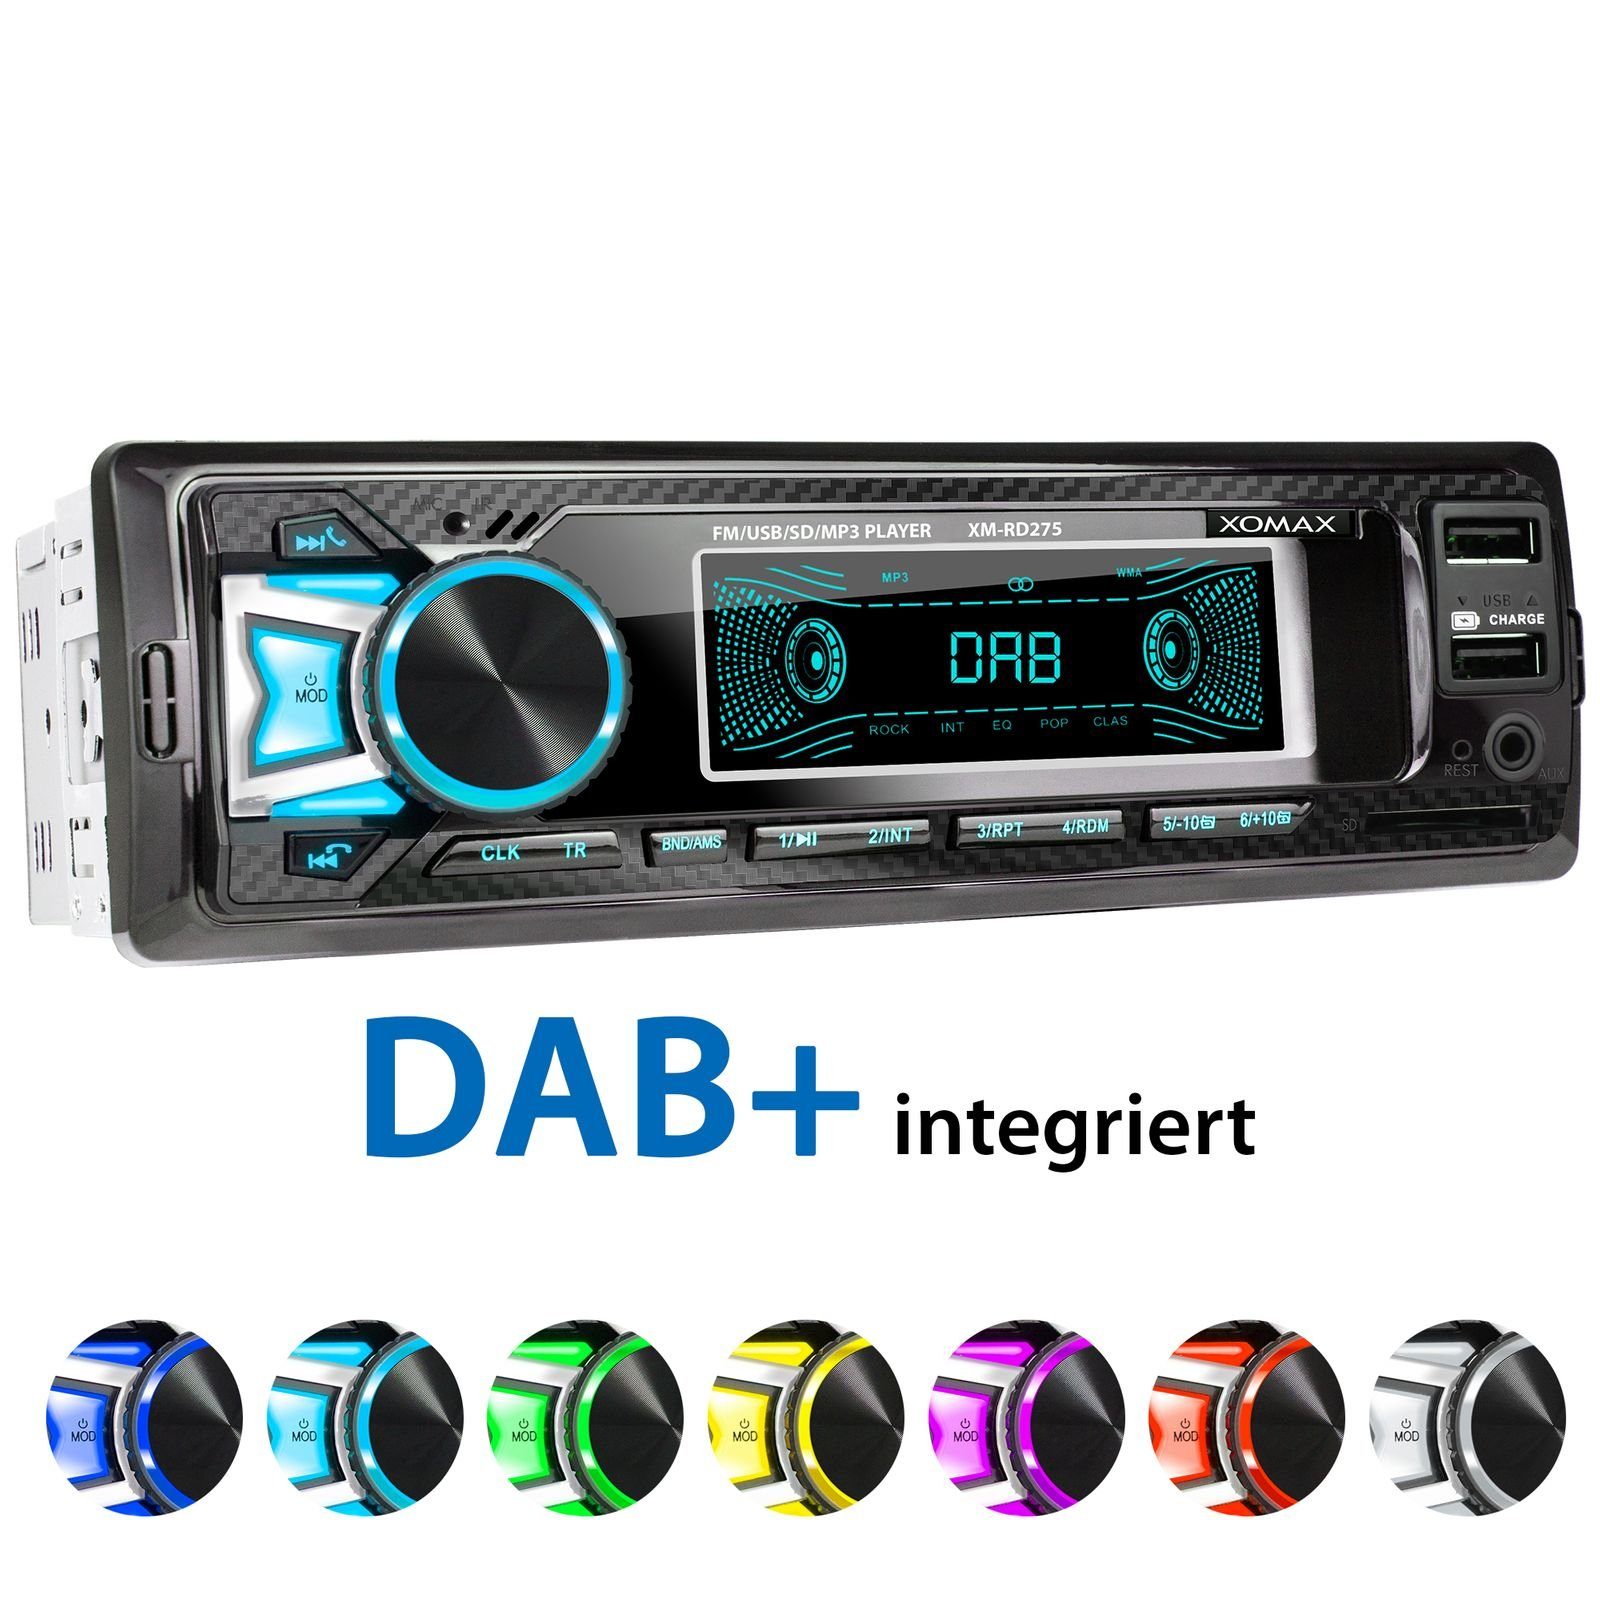 XOMAX XM-RD275 Autoradio mit DAB+ plus, Bluetooth, 2x USB, SD, Aux, 1 DIN Autoradio